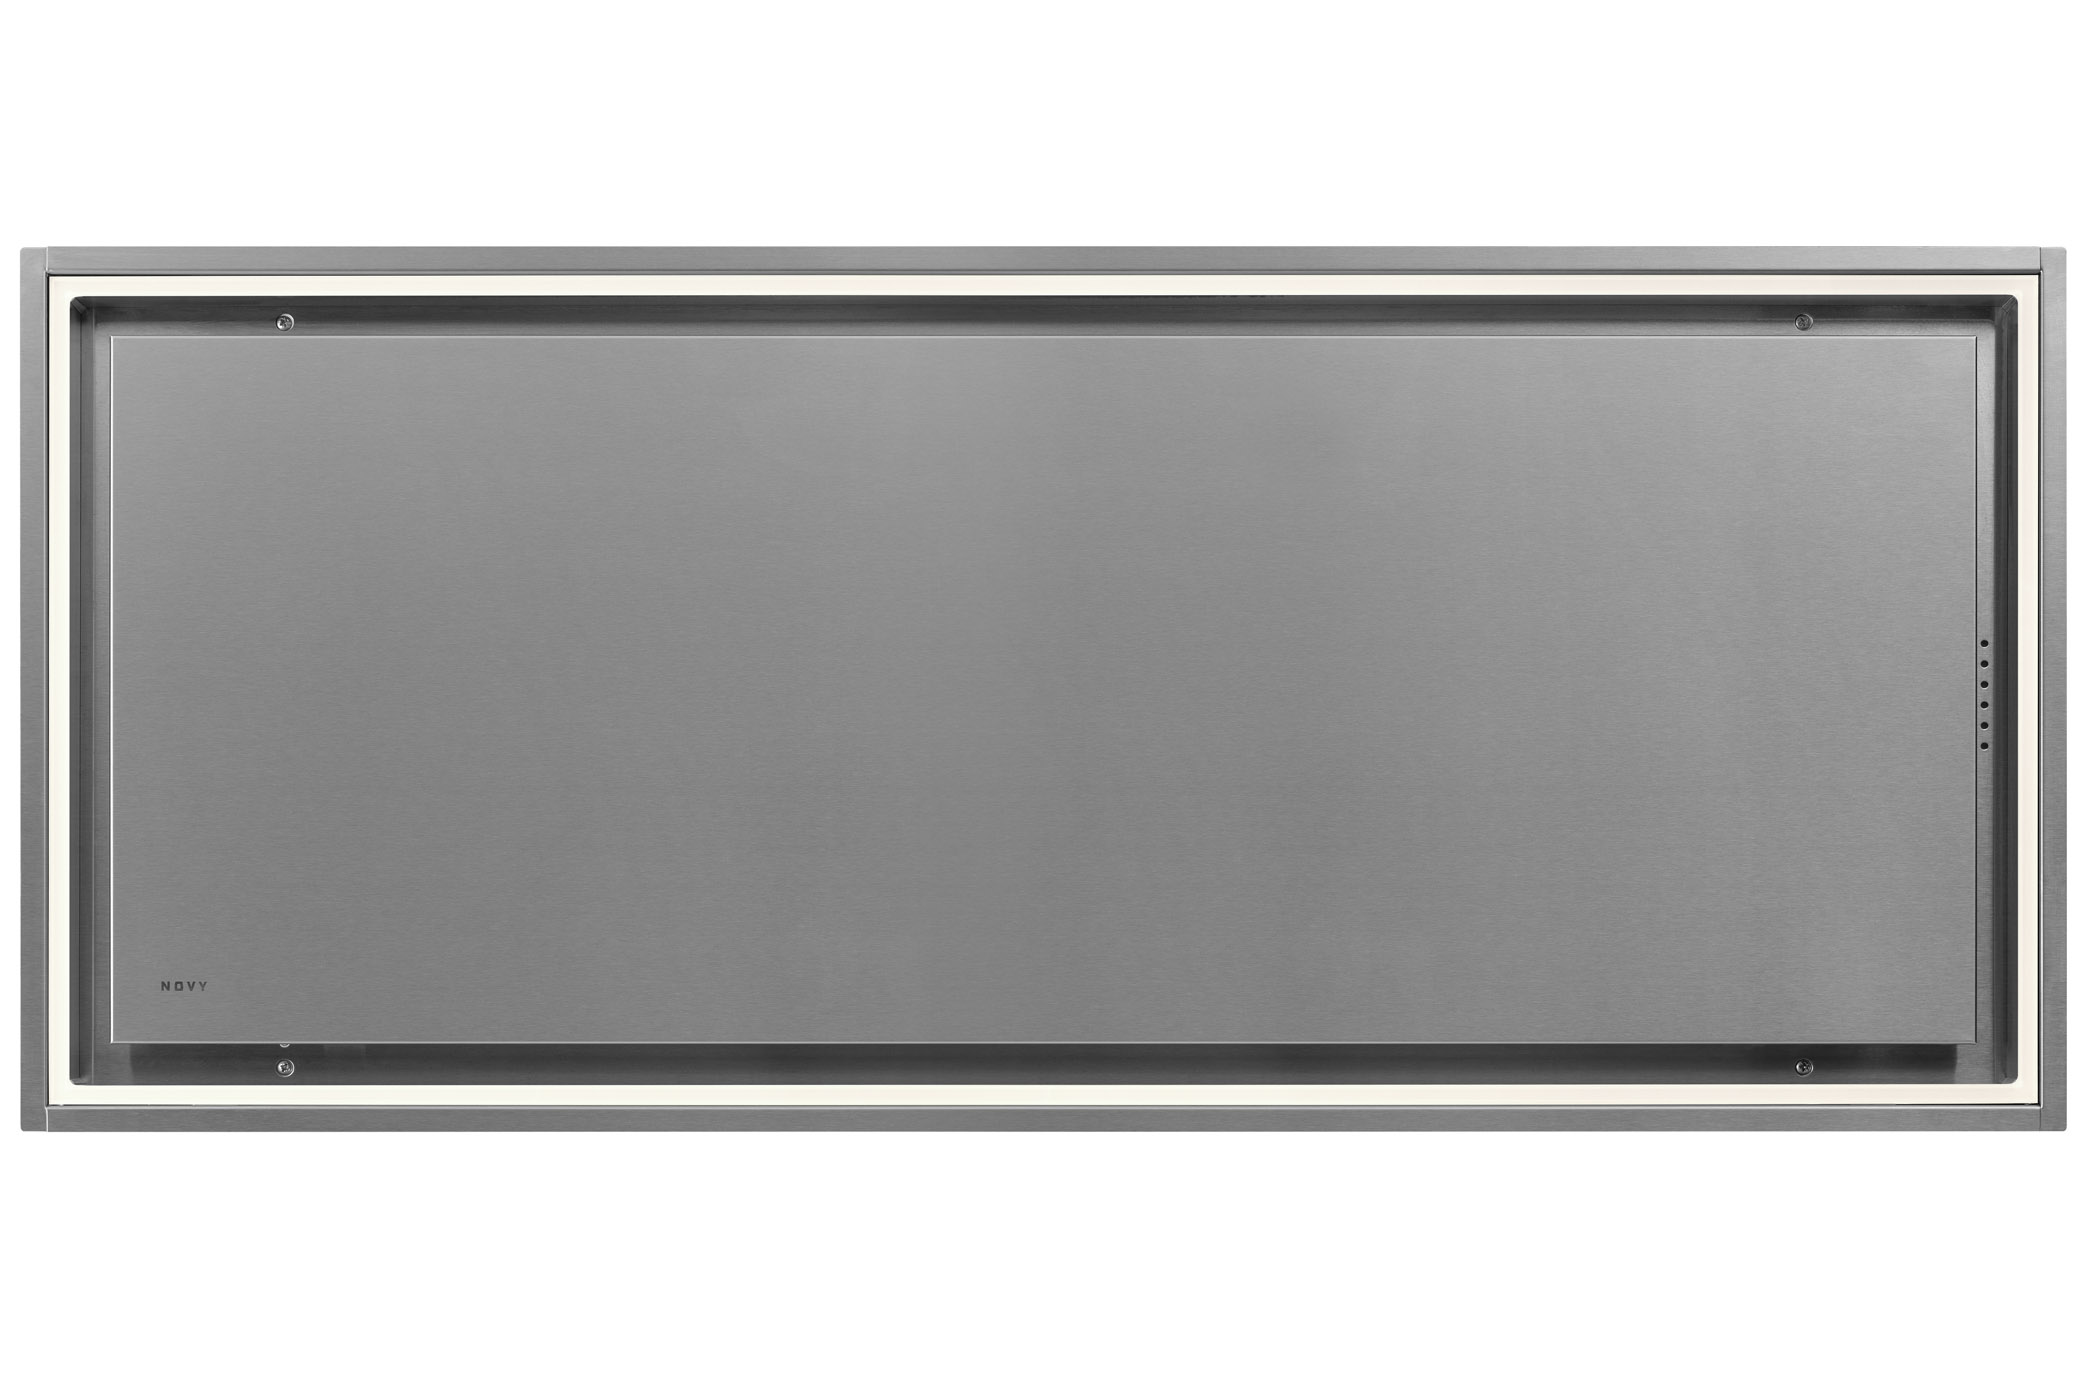 6940 Deckenhaube Pureline Pro Compact  Edelstahl 